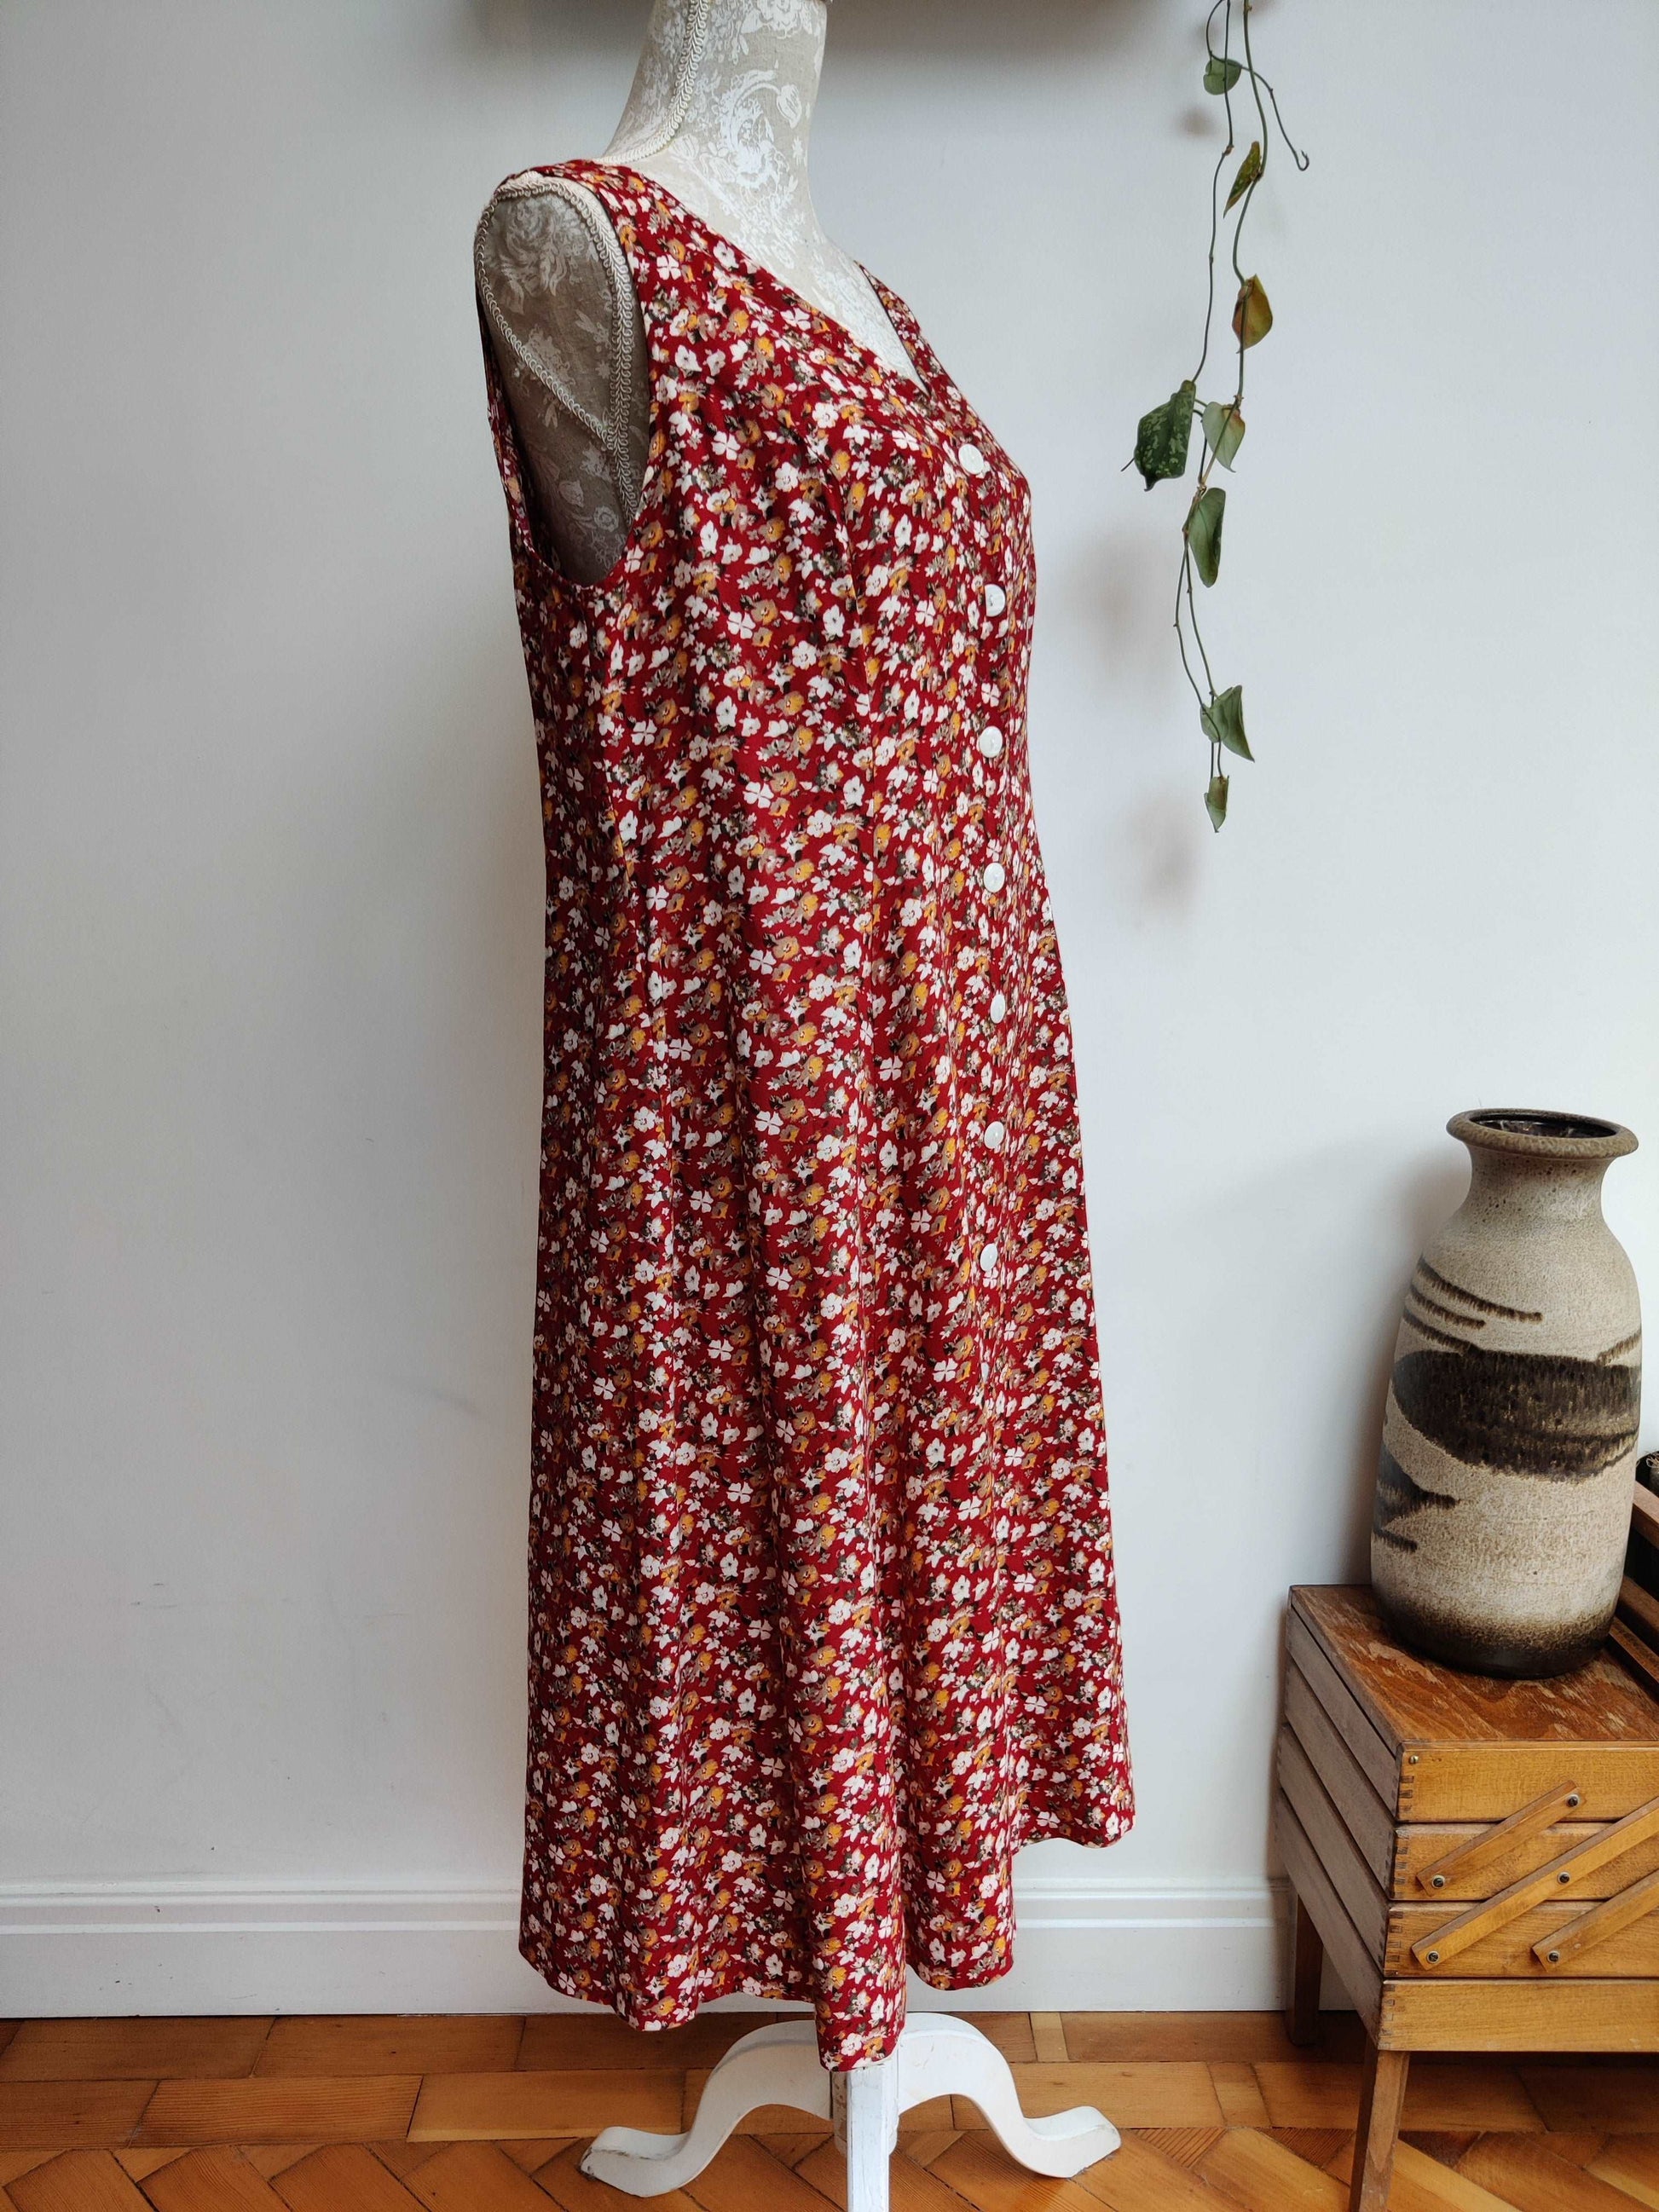 Beautiful vintage ditsy print floral dress. Size 16